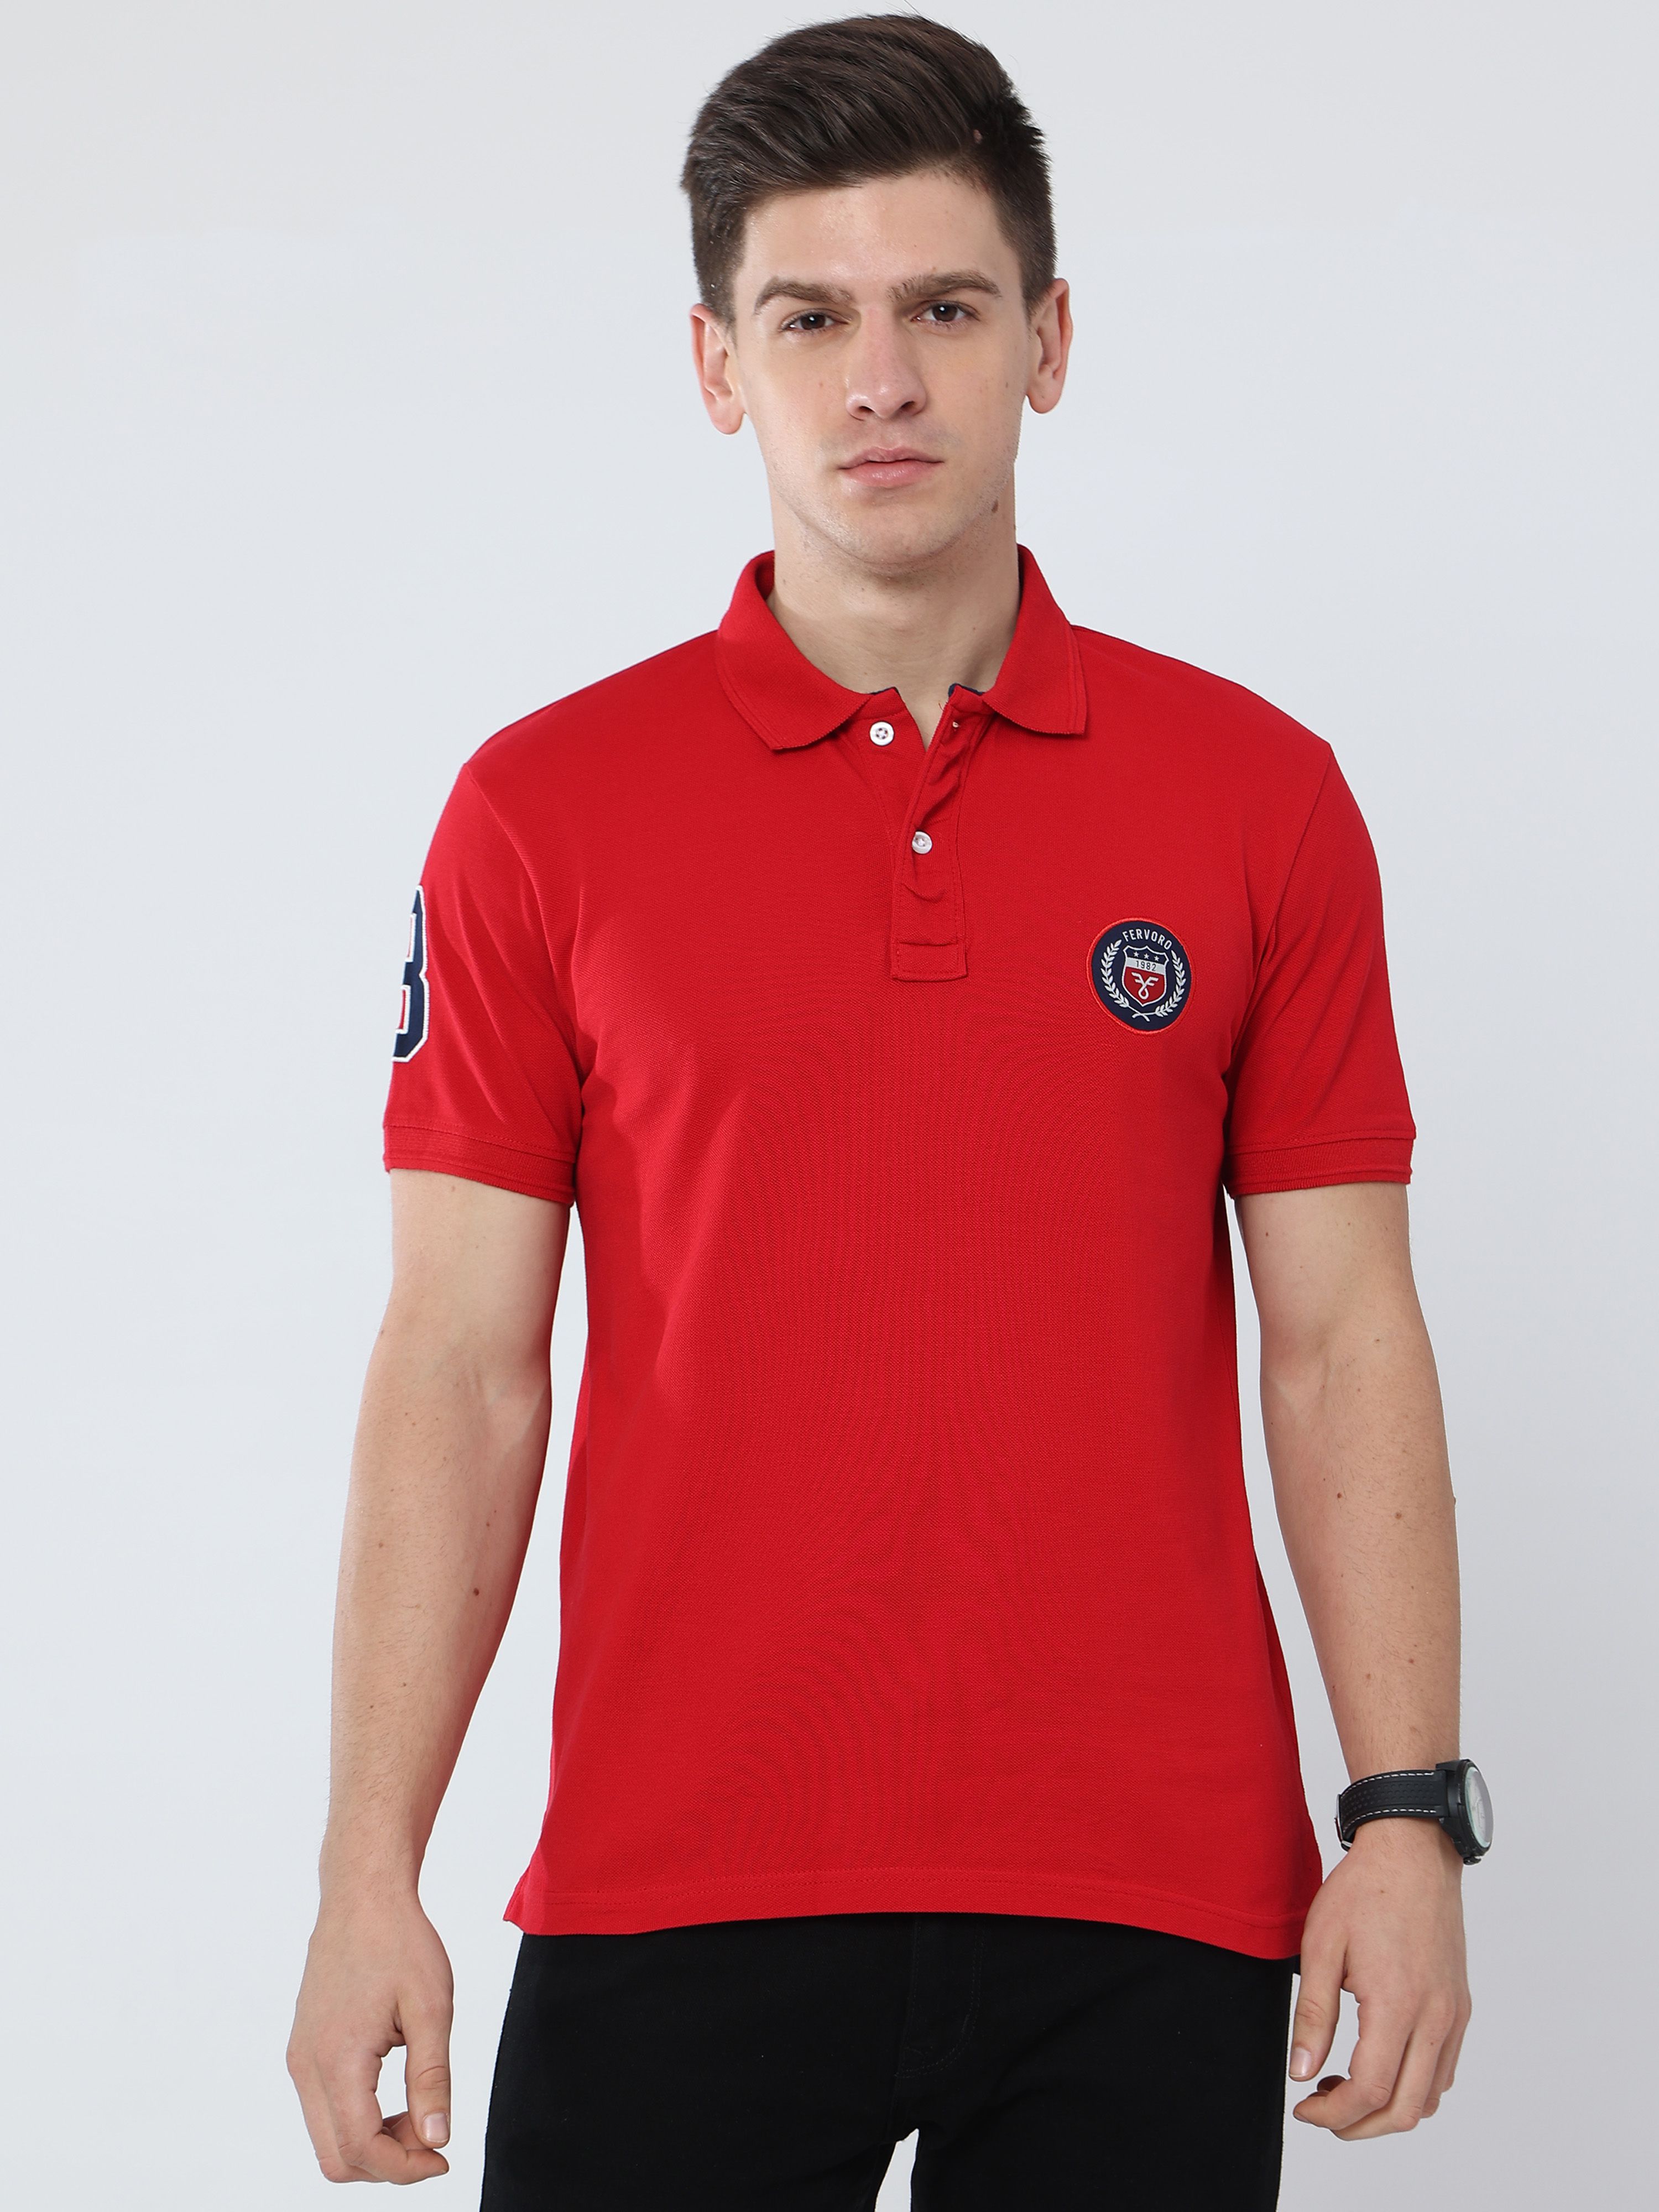     			FERVORO Cotton Blend Regular Fit Self Design Half Sleeves Men's Polo T Shirt - Red ( Pack of 1 )